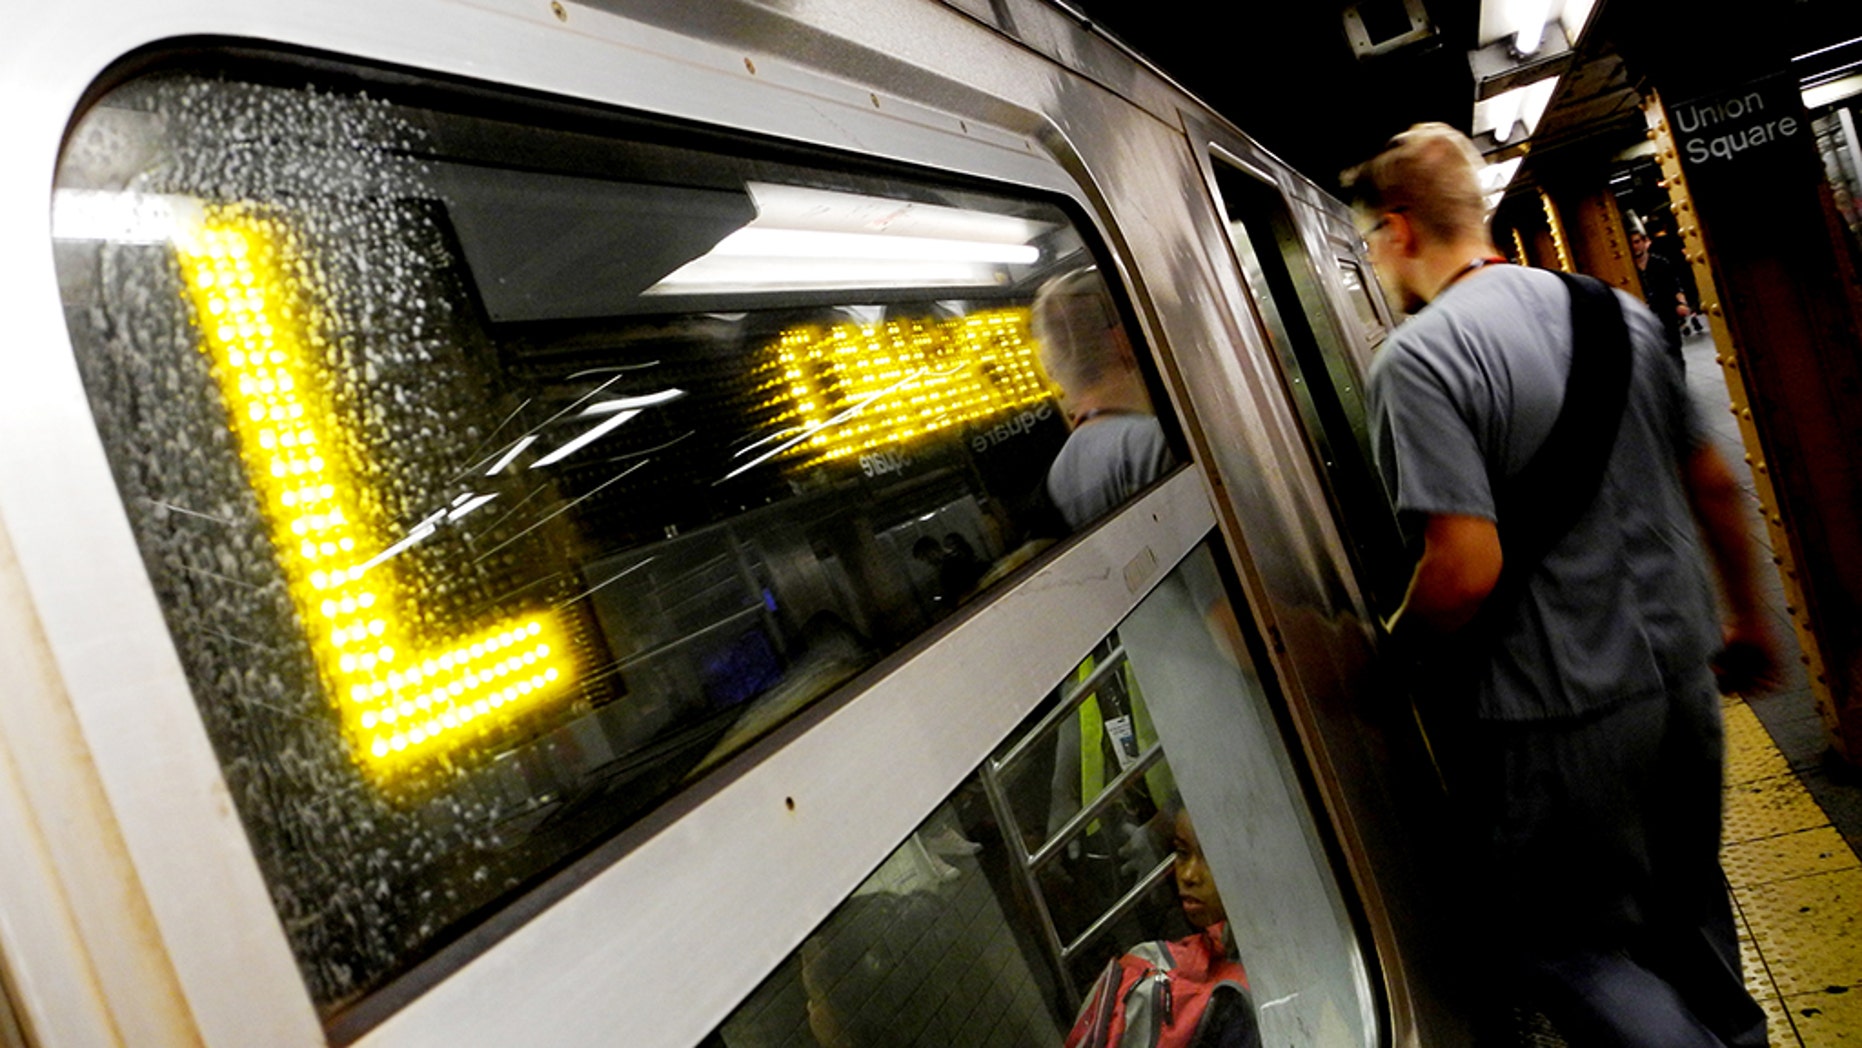 Full L train shutdown in New York City no longer happening, Cuomo says, but subway commuters still unhappy